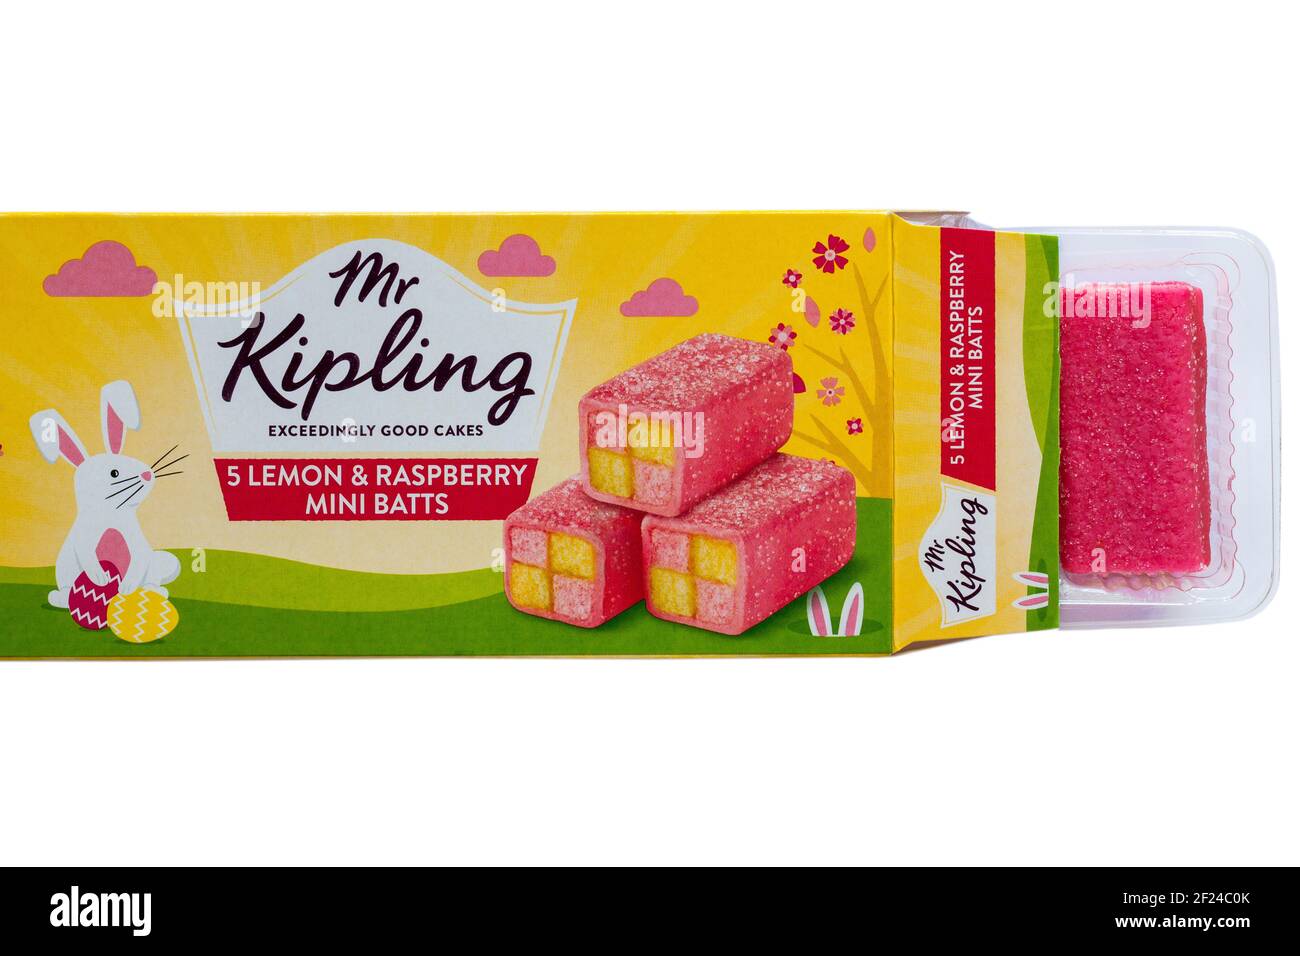 Mr kipling cake fotografías e imágenes de alta resolución - Alamy